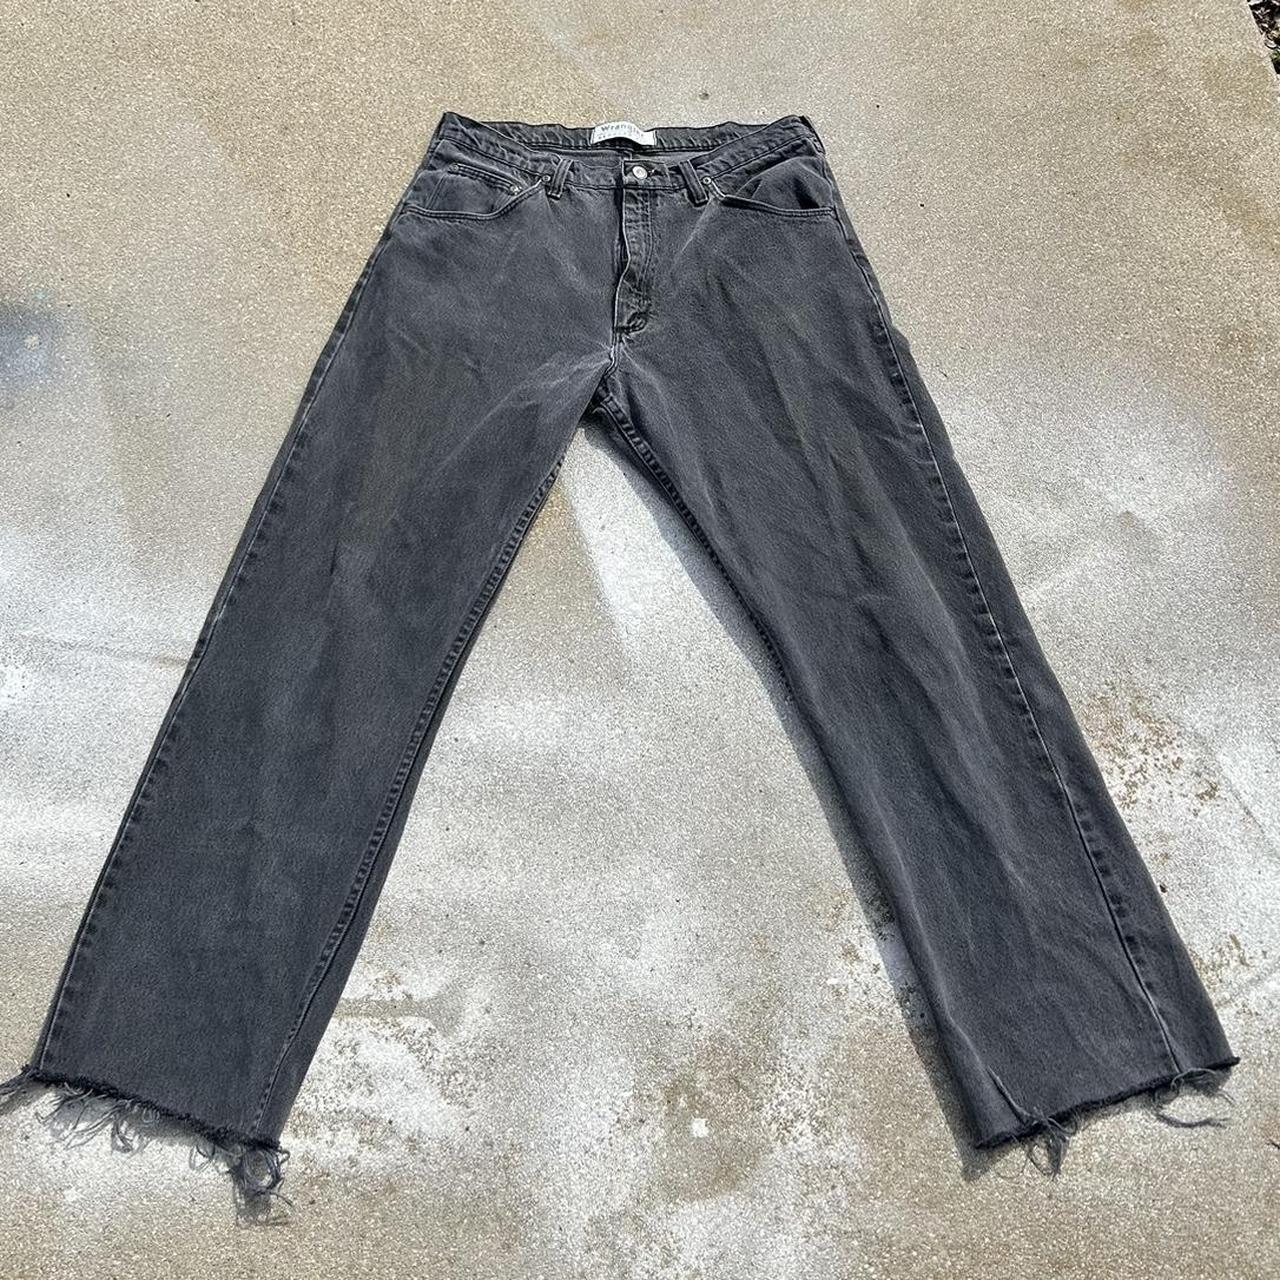 Faded Black Wrangler Jeans